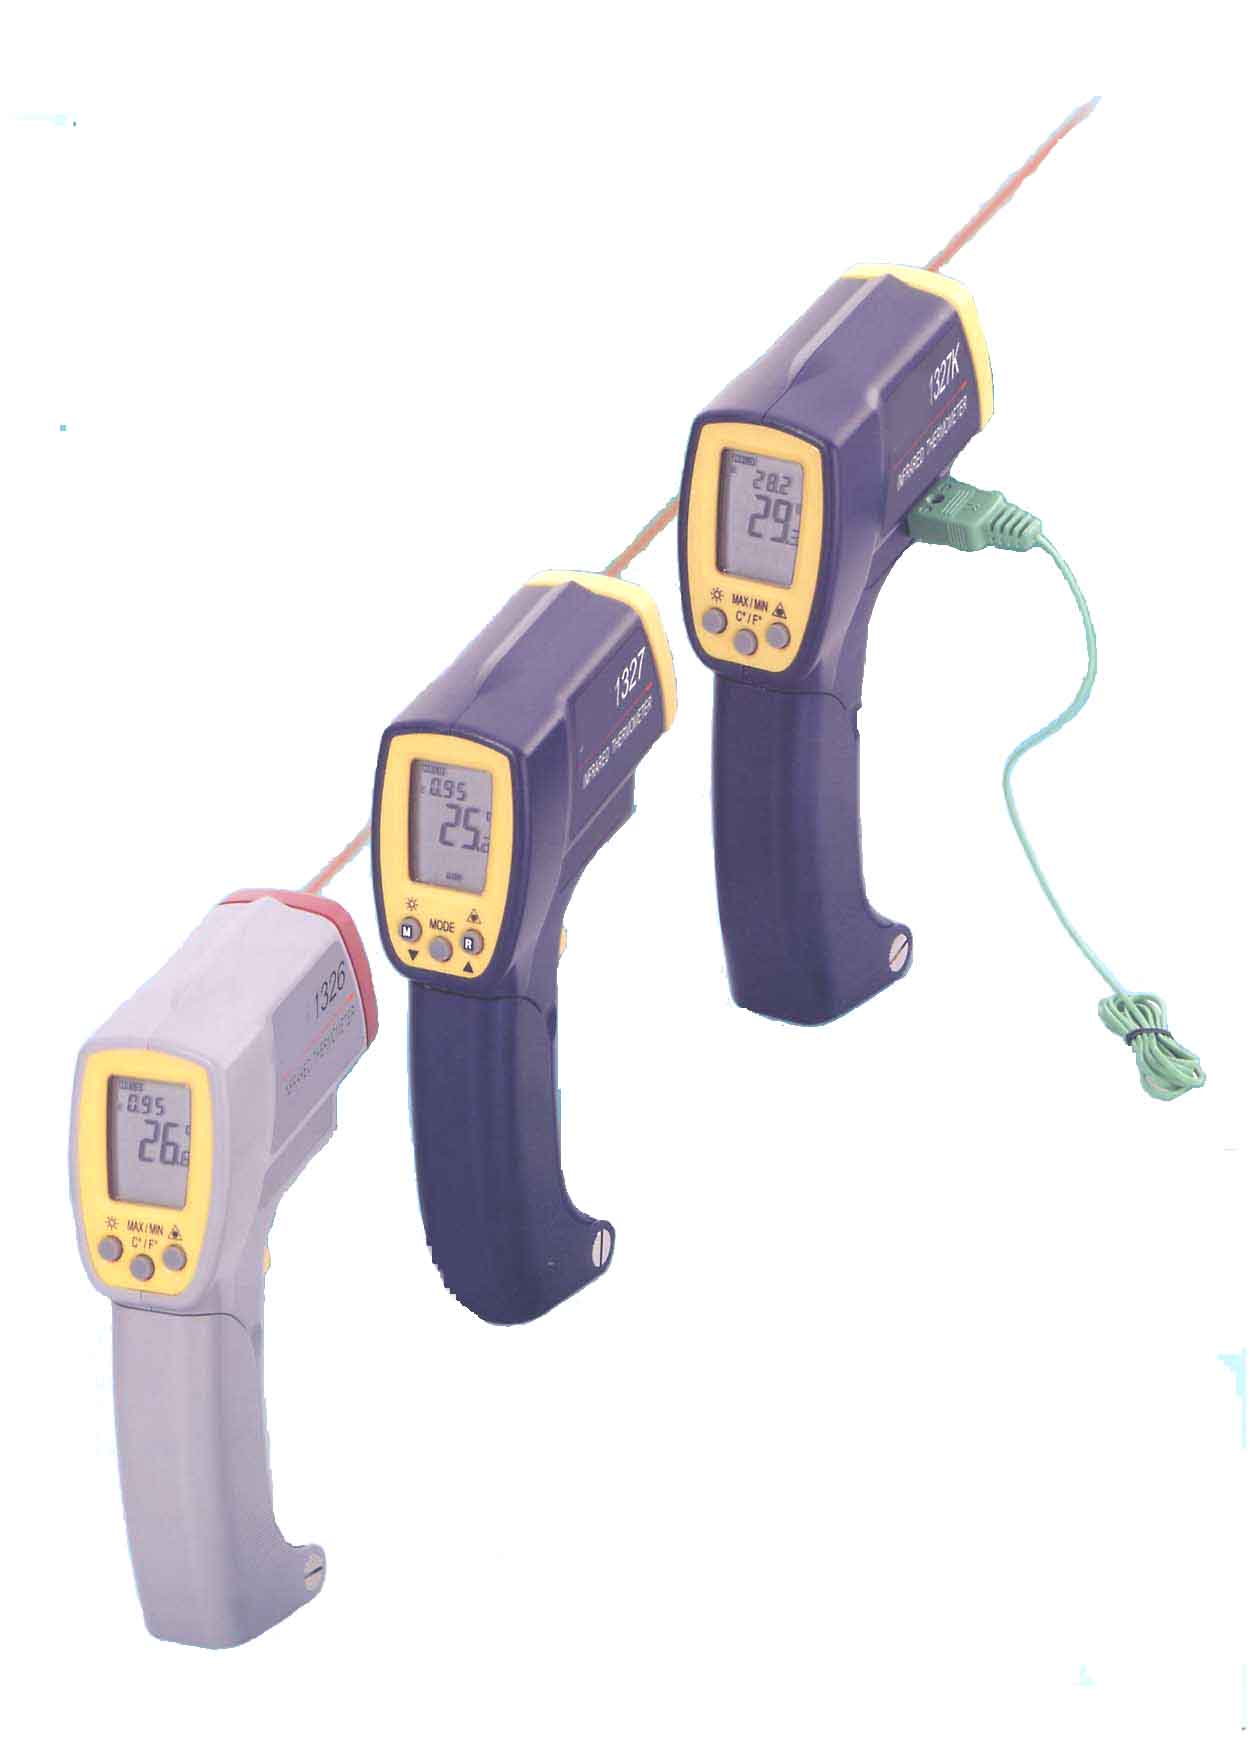  Gun Type Infrared Thermometers (Орудийного типа Инфракрасные термометры)